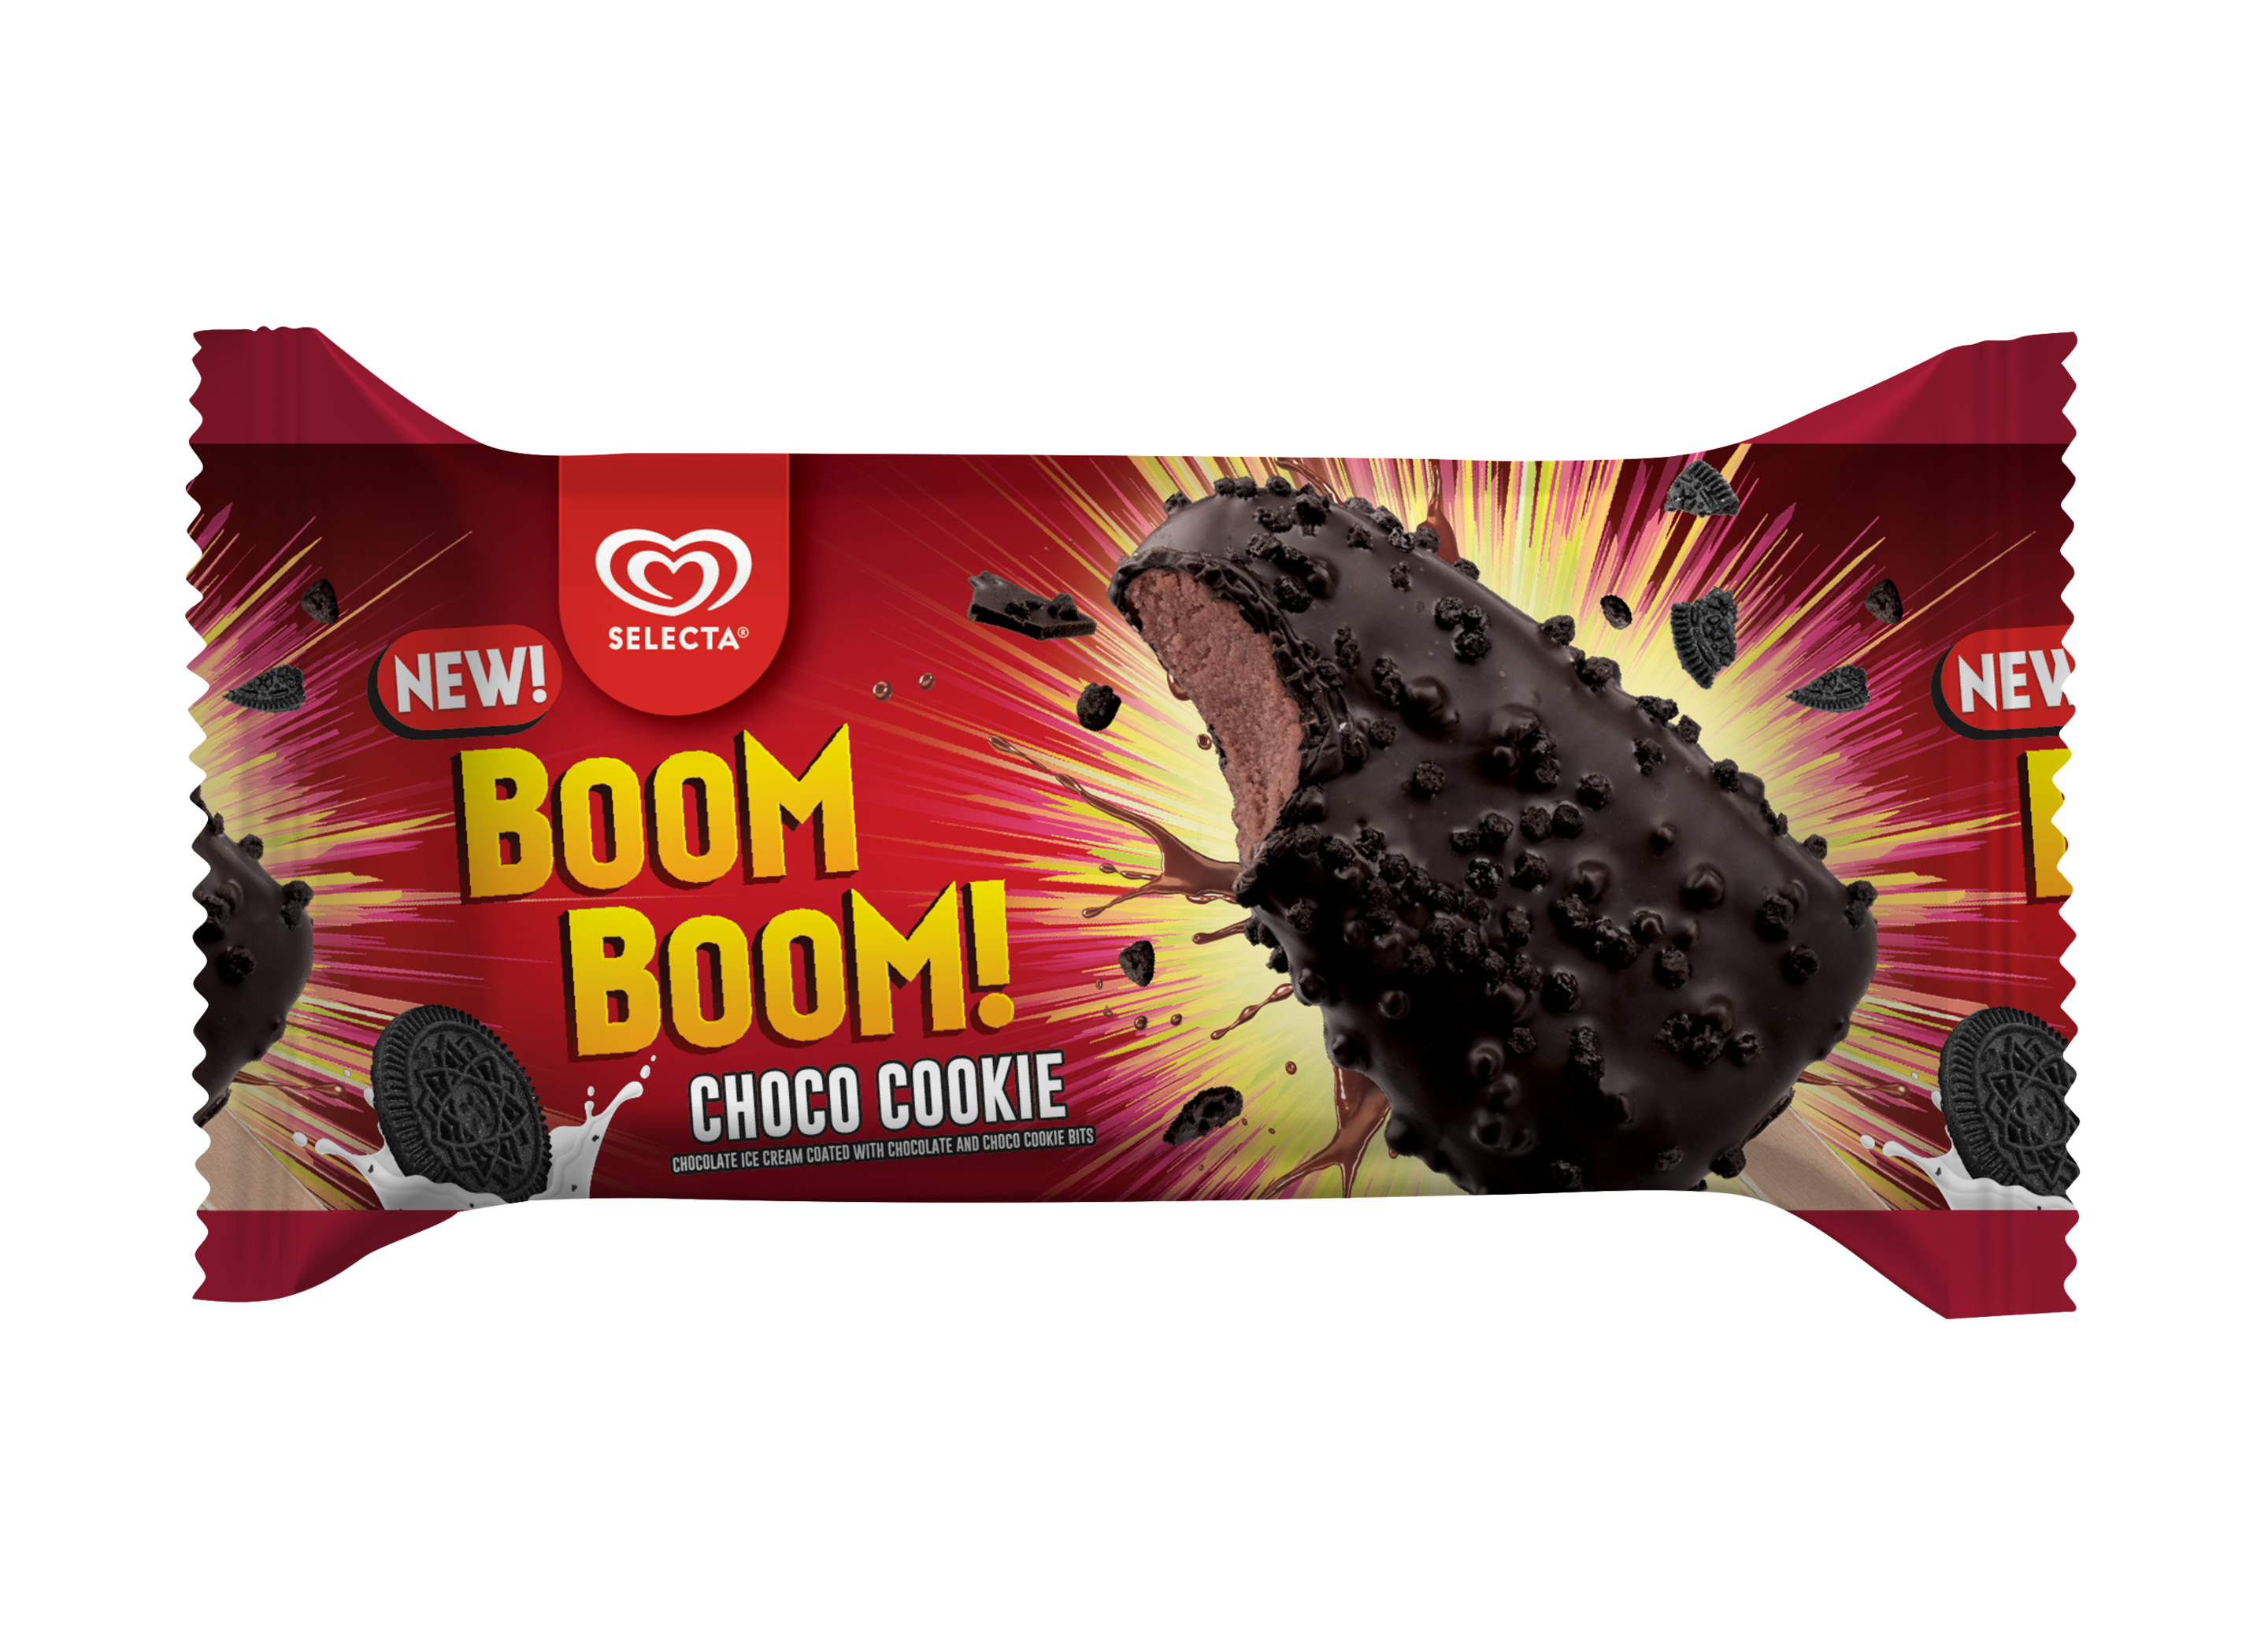 Selecta Boom Boom Choco Cookie